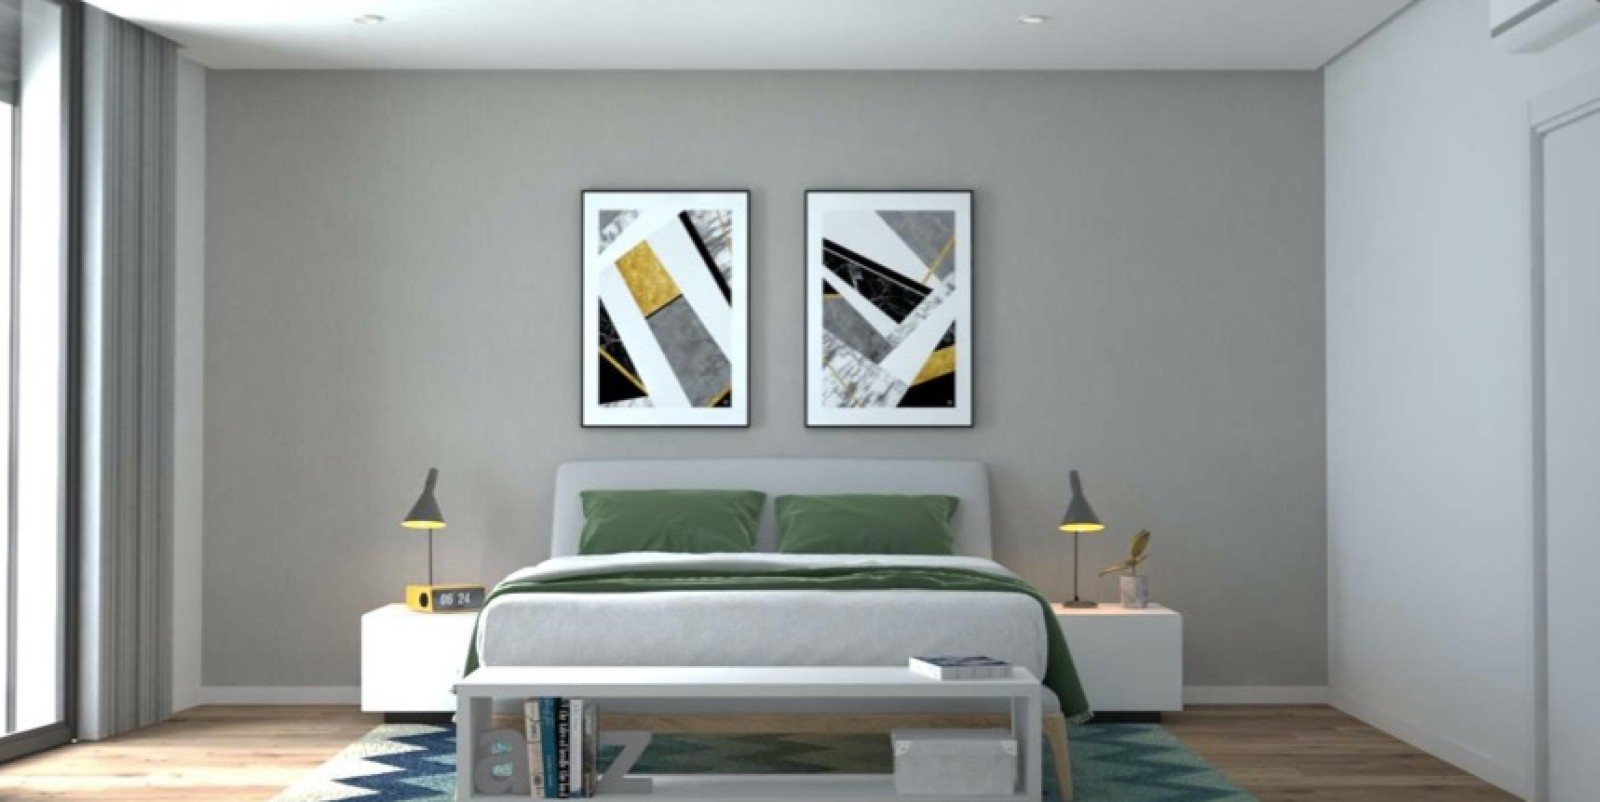 4 bedroom flat for sale in São brás de Alportel, Algarve_226416